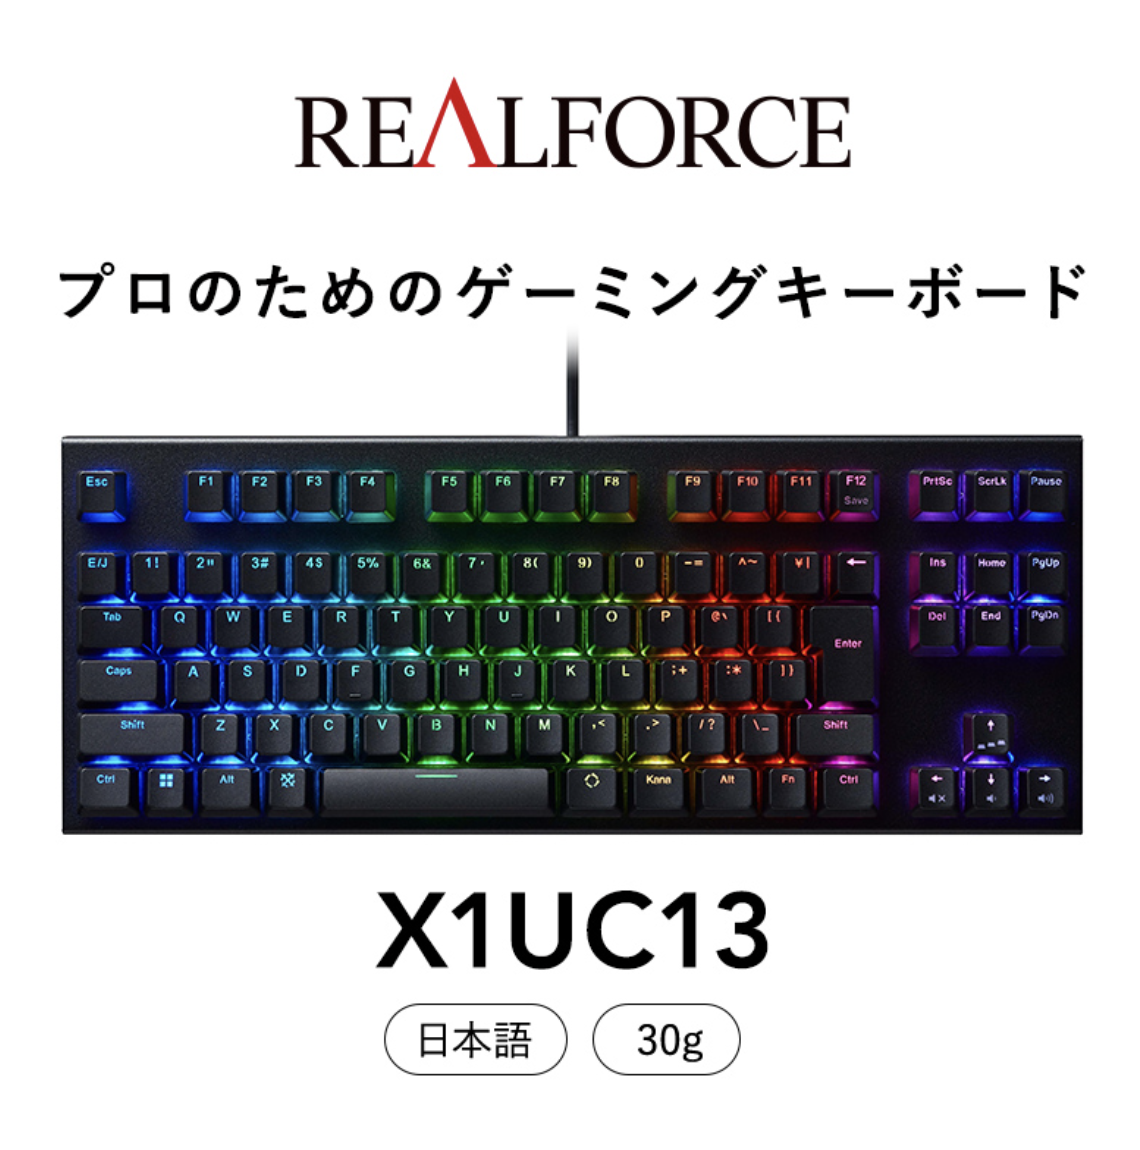 REALFORCE GX1 ゲーミングキーボード X1UC13 日本語配列 2色成形 キー荷重30g